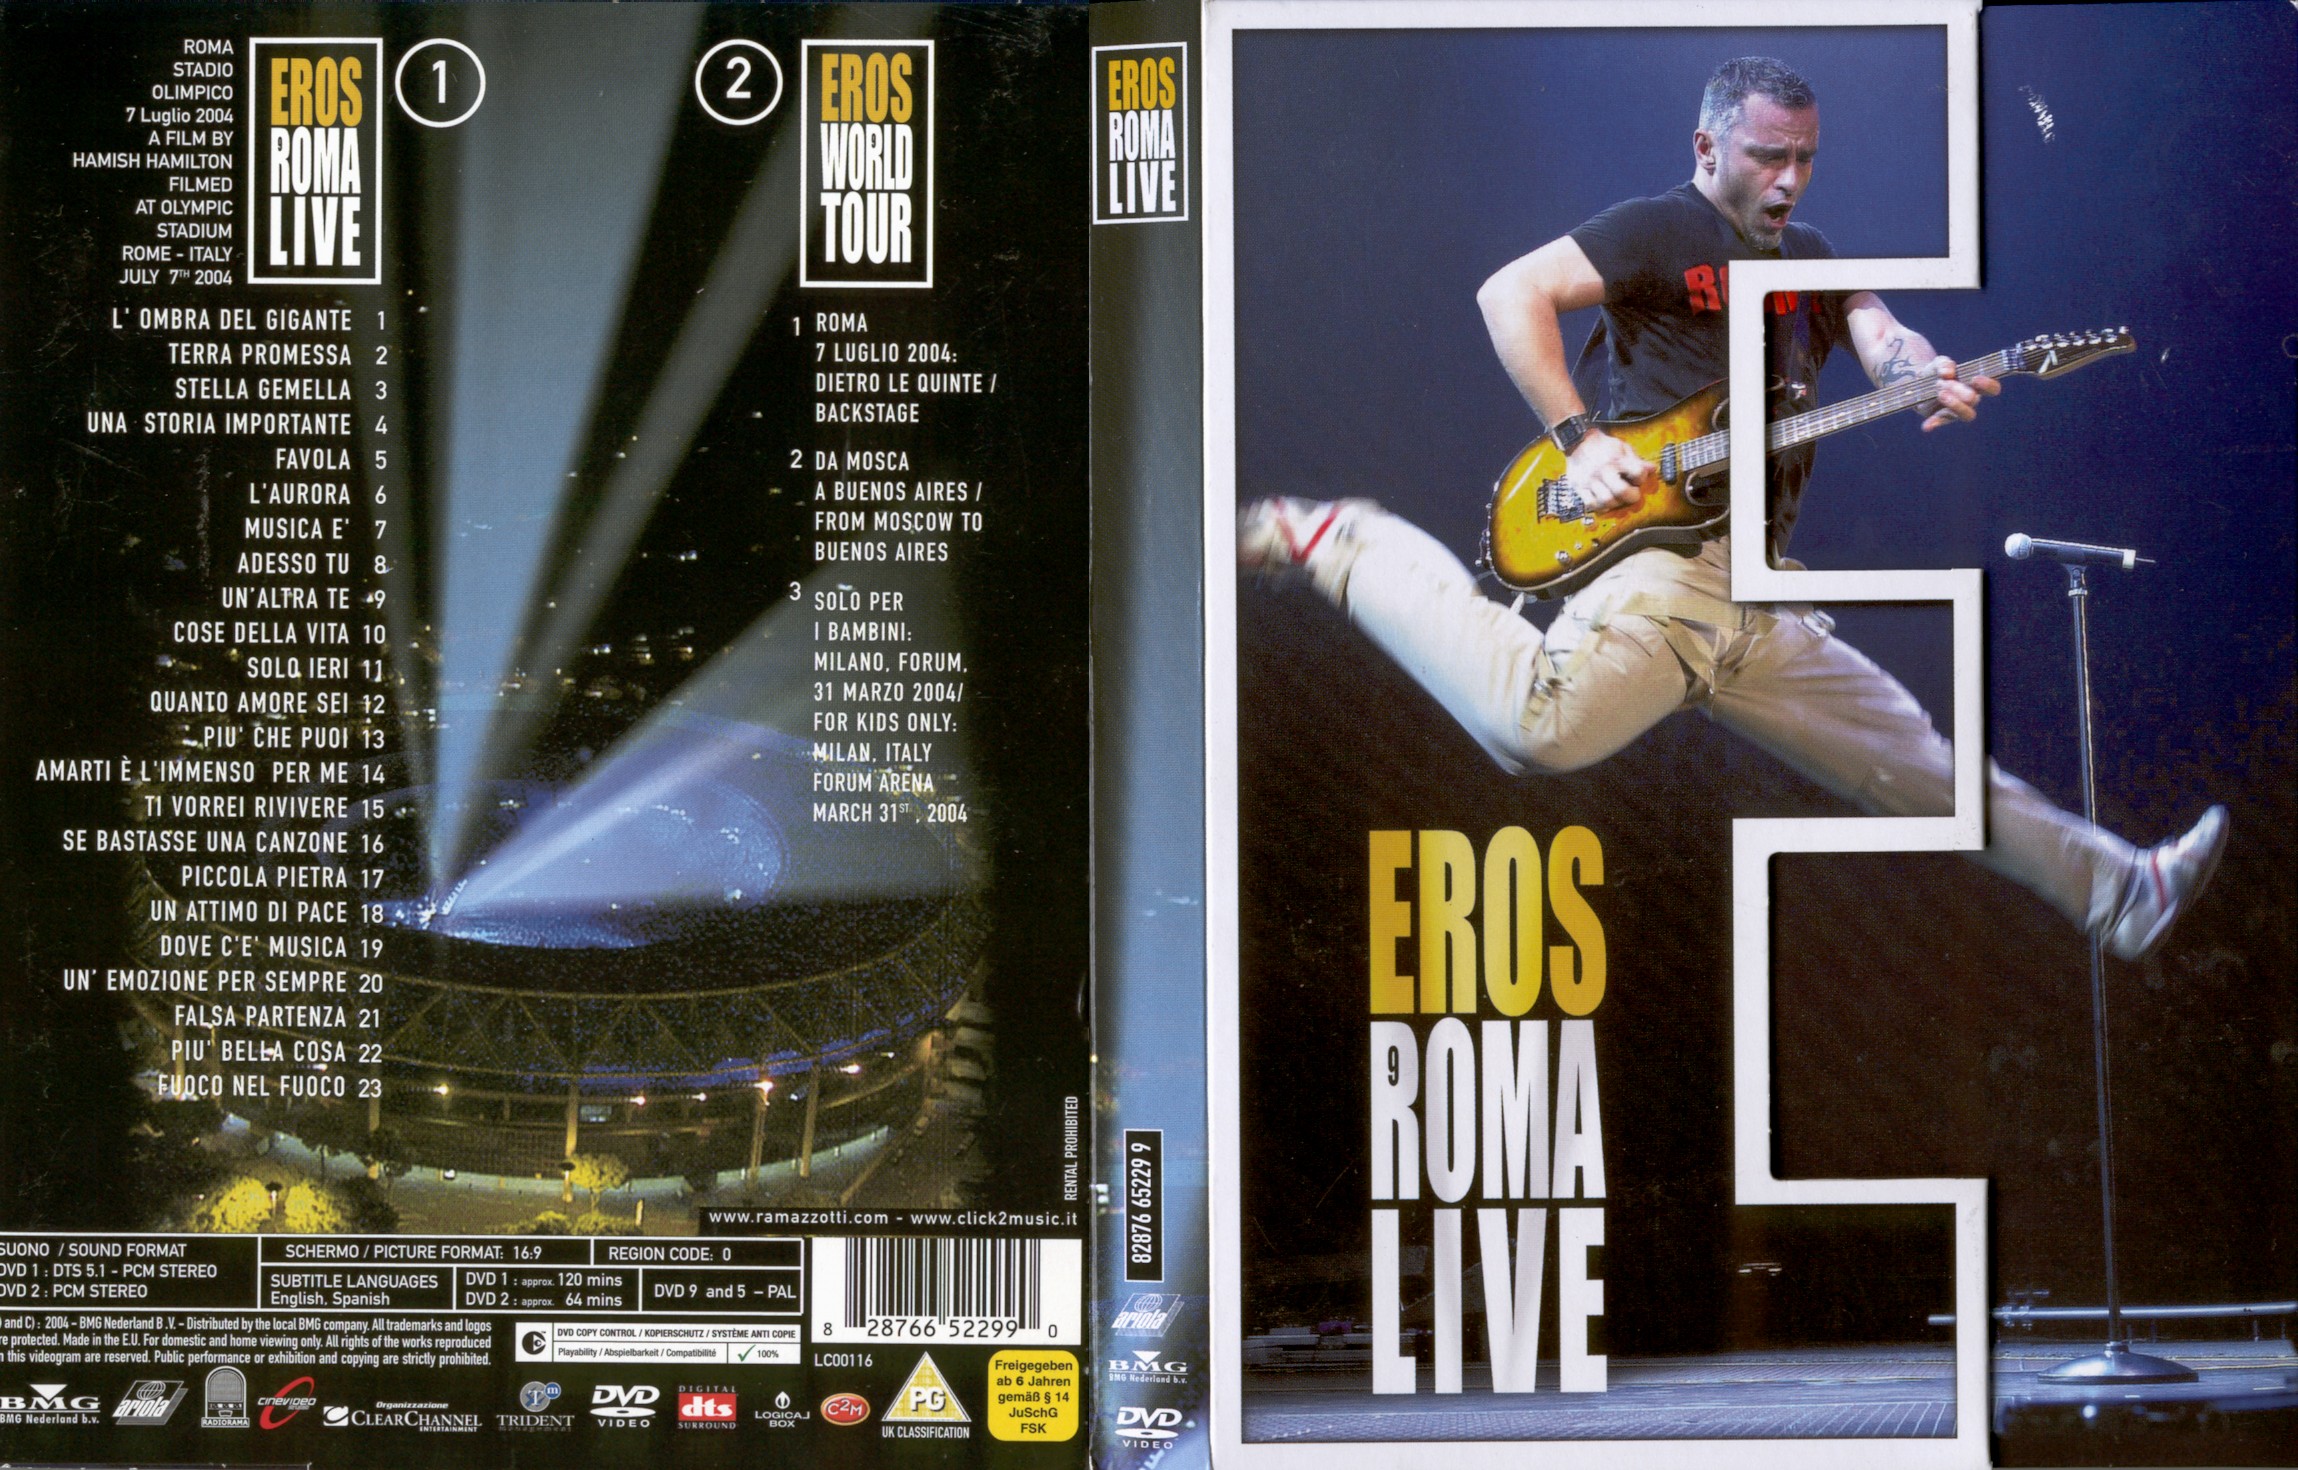 Jaquette DVD Eros roma live